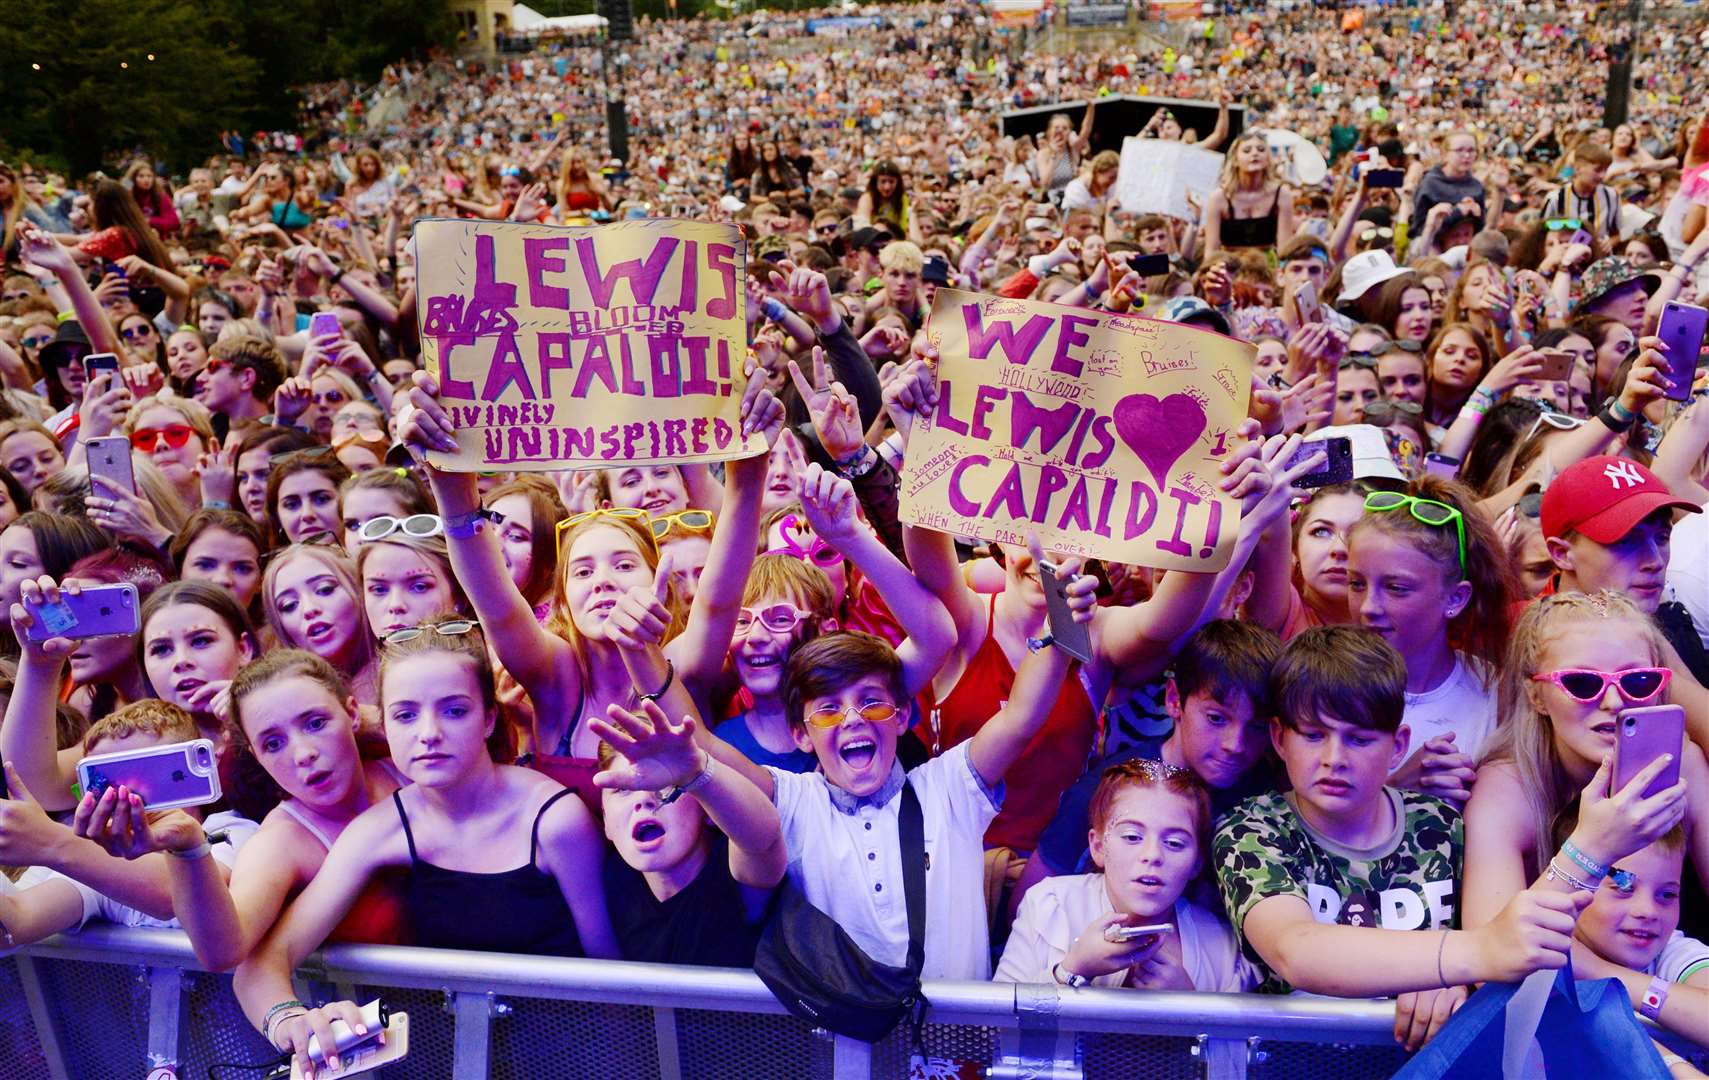 Belladrum 2019. Crowds go wild for Lewis Capaldi. Picture: Gary Anthony